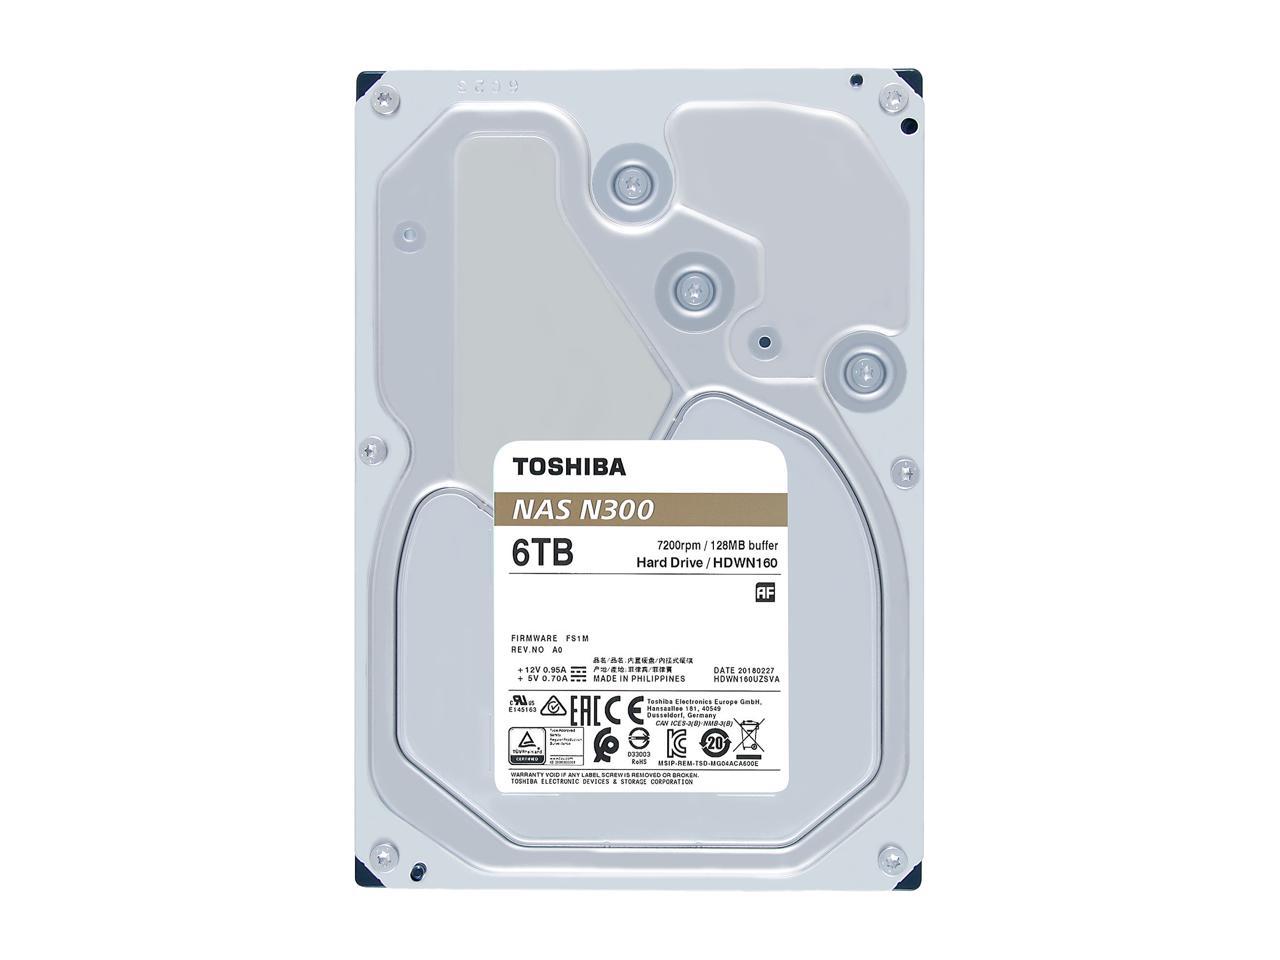 Toshiba N300 6TB NAS Internal Hard Drive 7200 RPM SATA 6Gb/s 128MB Cache 3.5inch - HDWN160XZSTA (RETAIL PACKAGE)